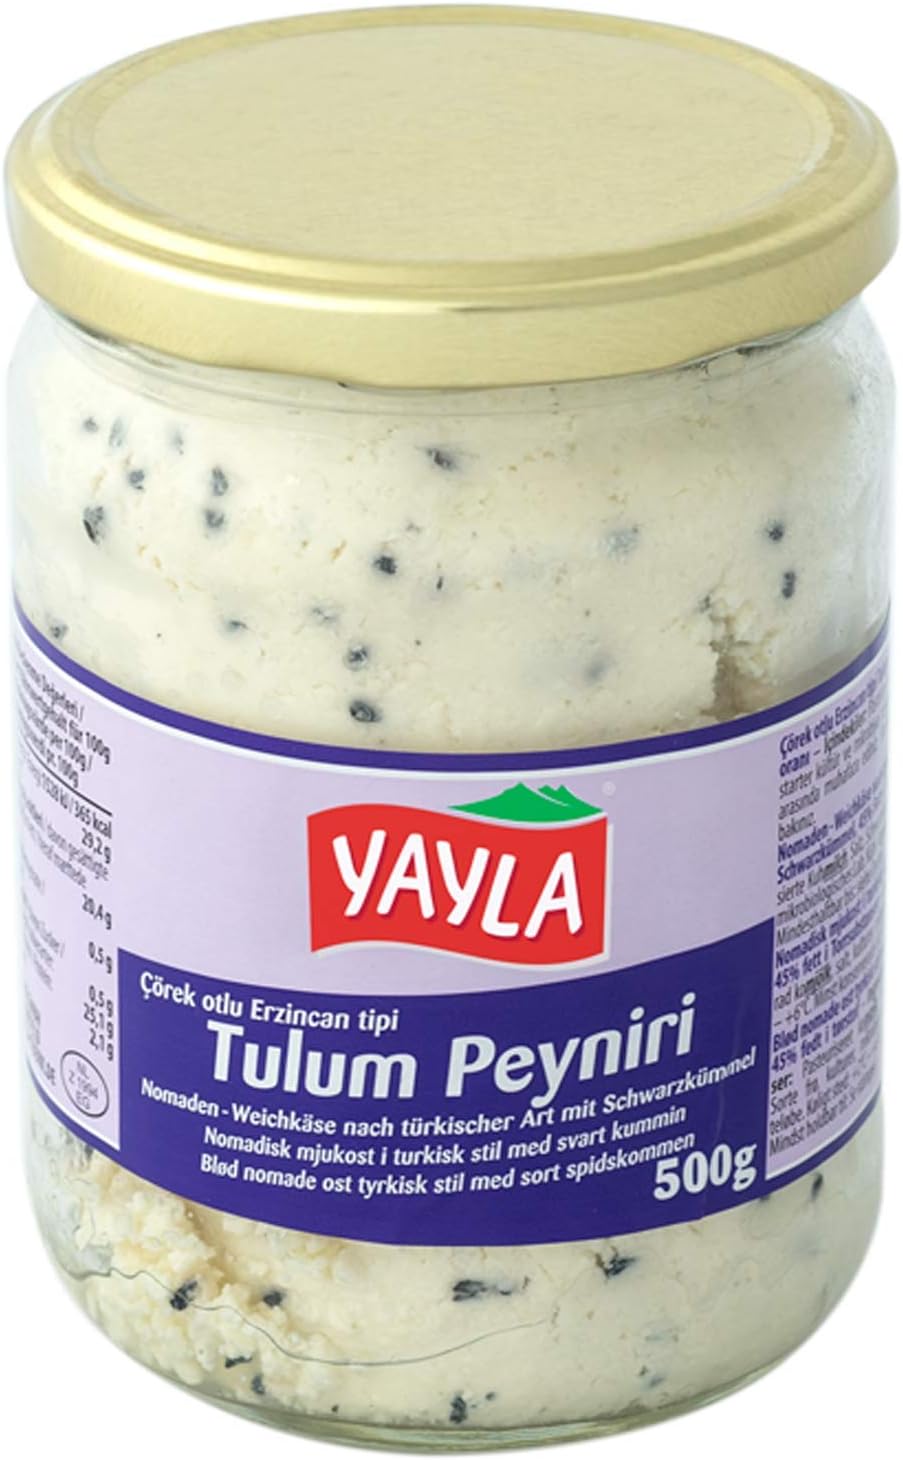 Yayla Soft Cheese With Black Seed Turkish Style- Corek Otlu Tulum Peyniri 500g